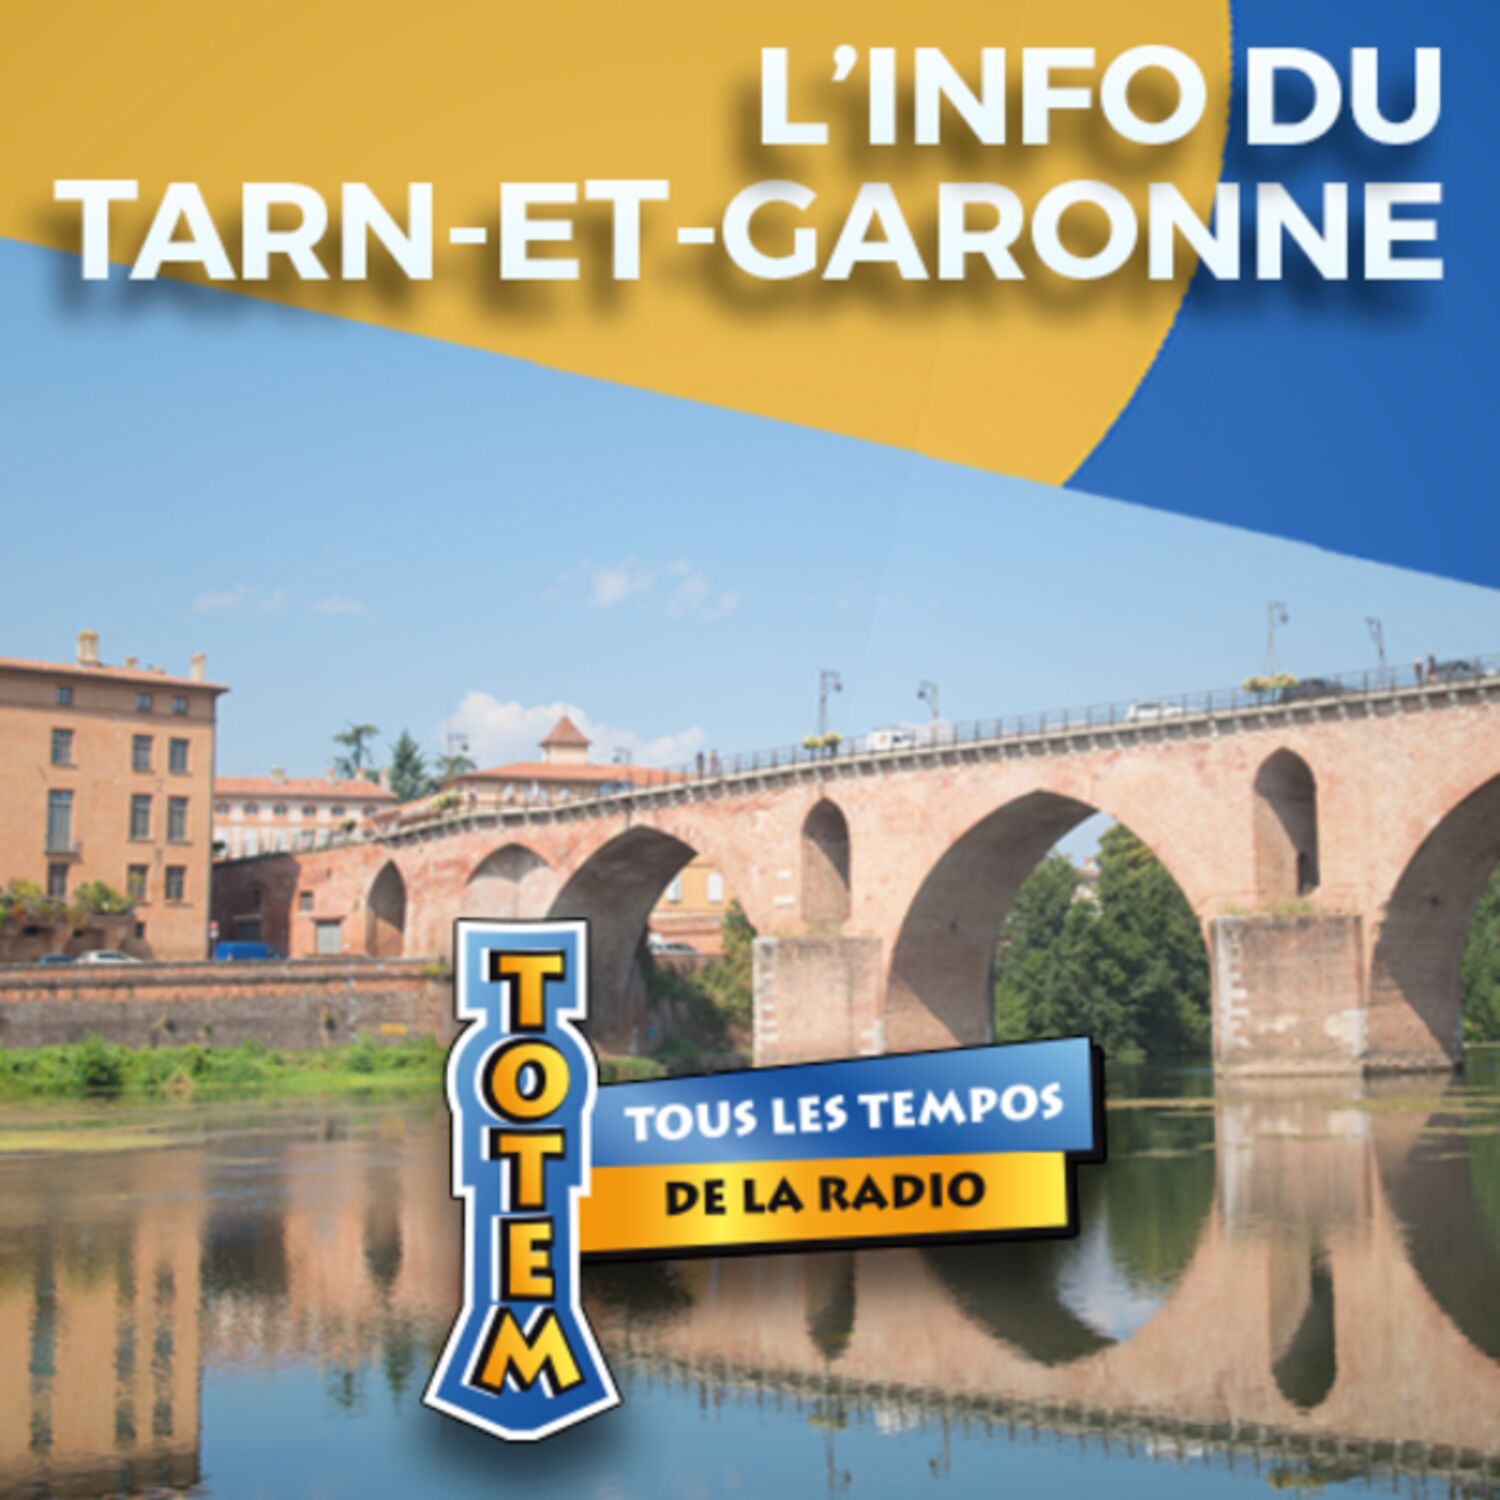 L'info du Tarn-et-Garonne du 19/05/23 à 05h58